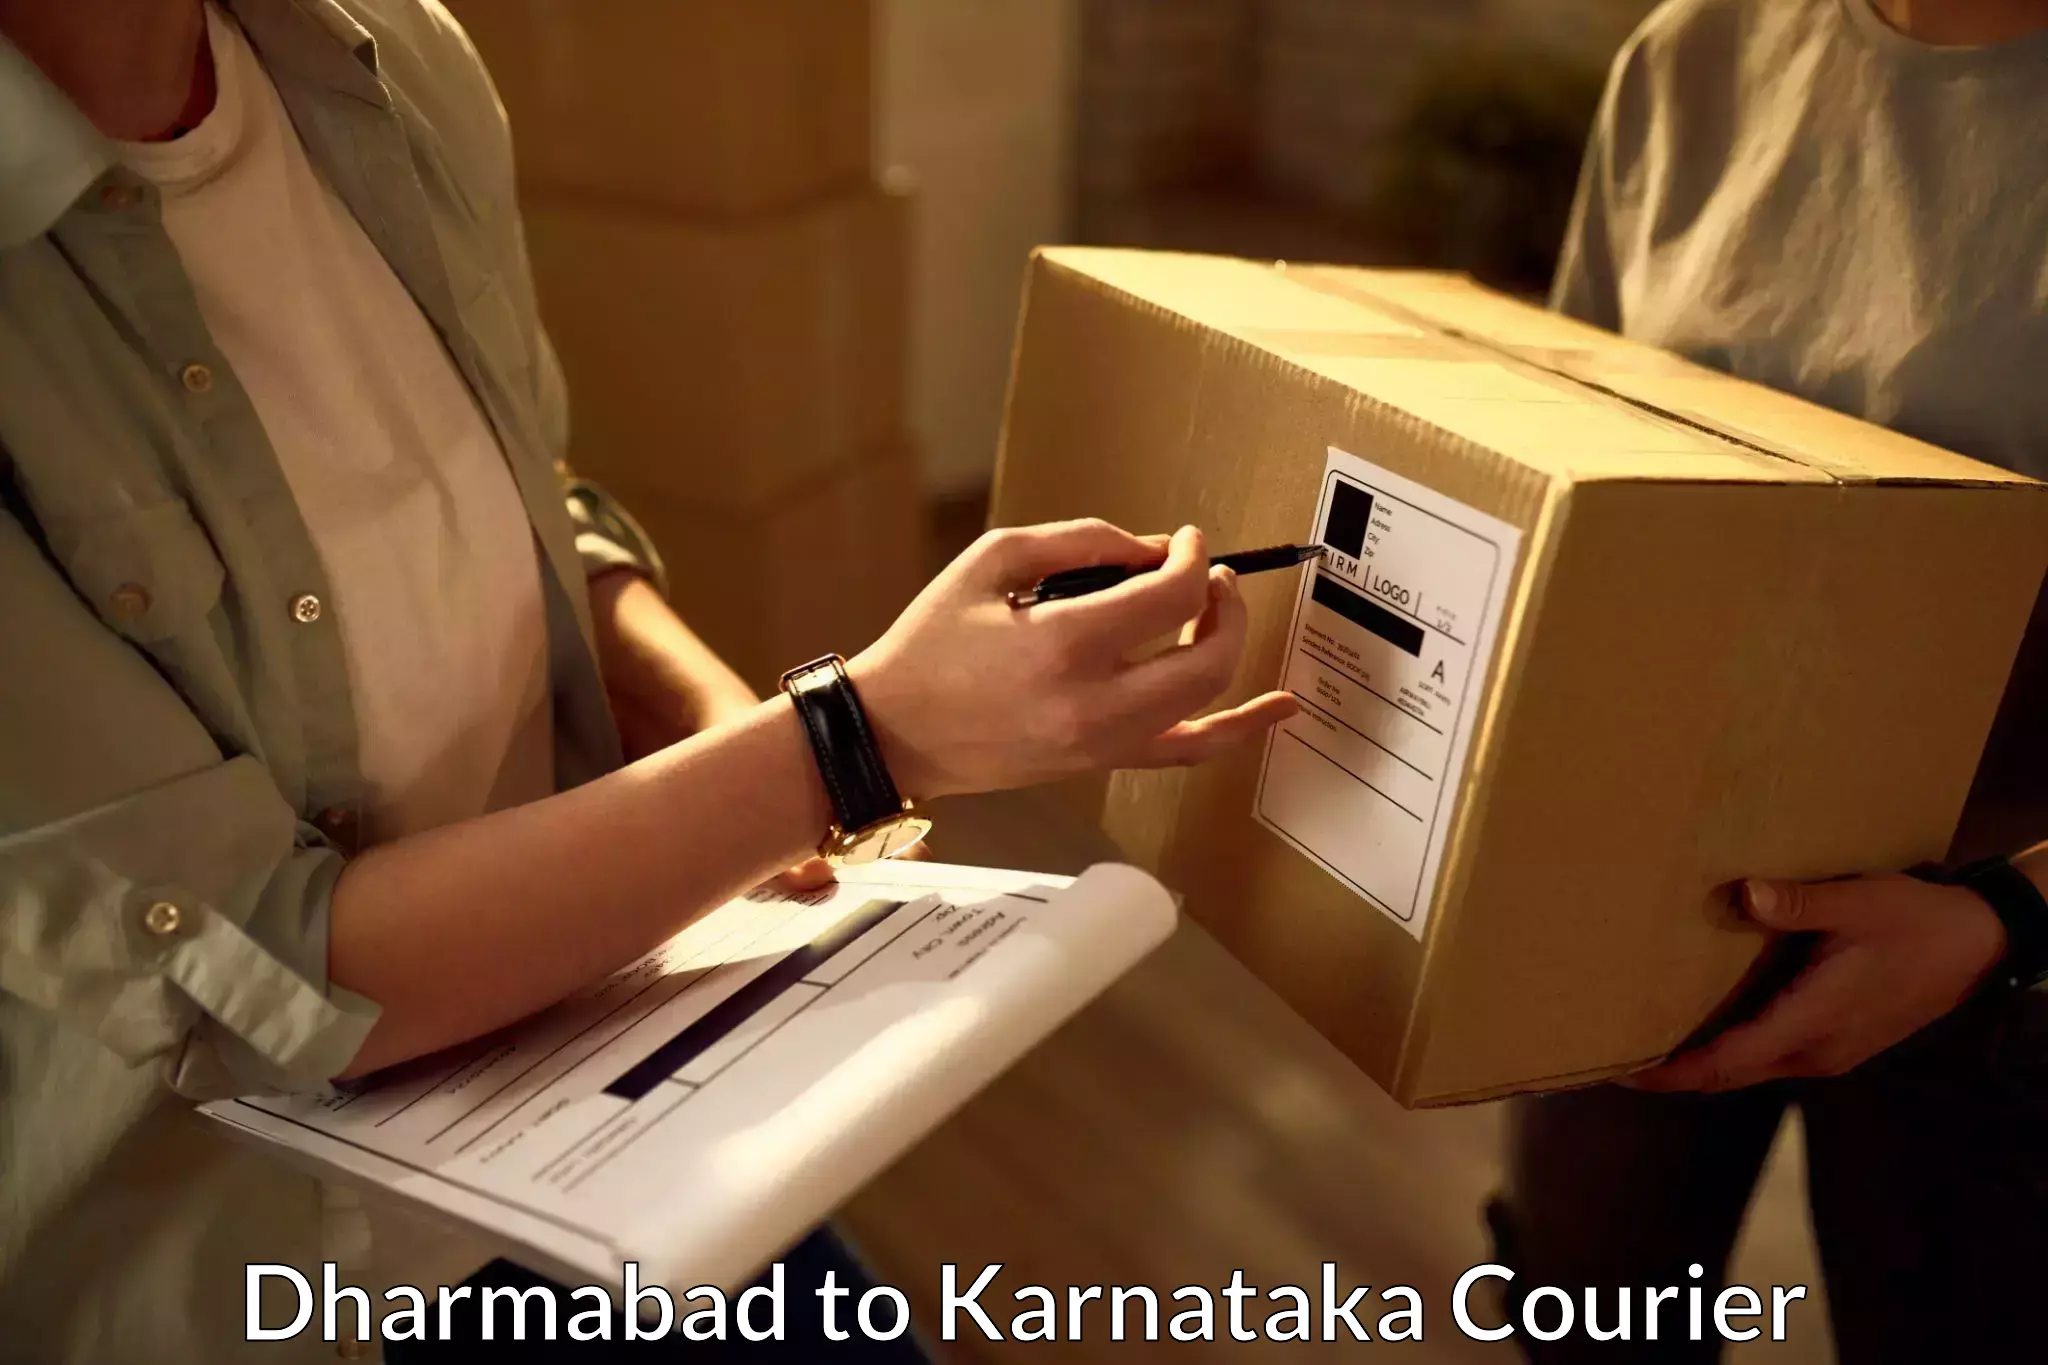 International courier networks Dharmabad to Karnataka